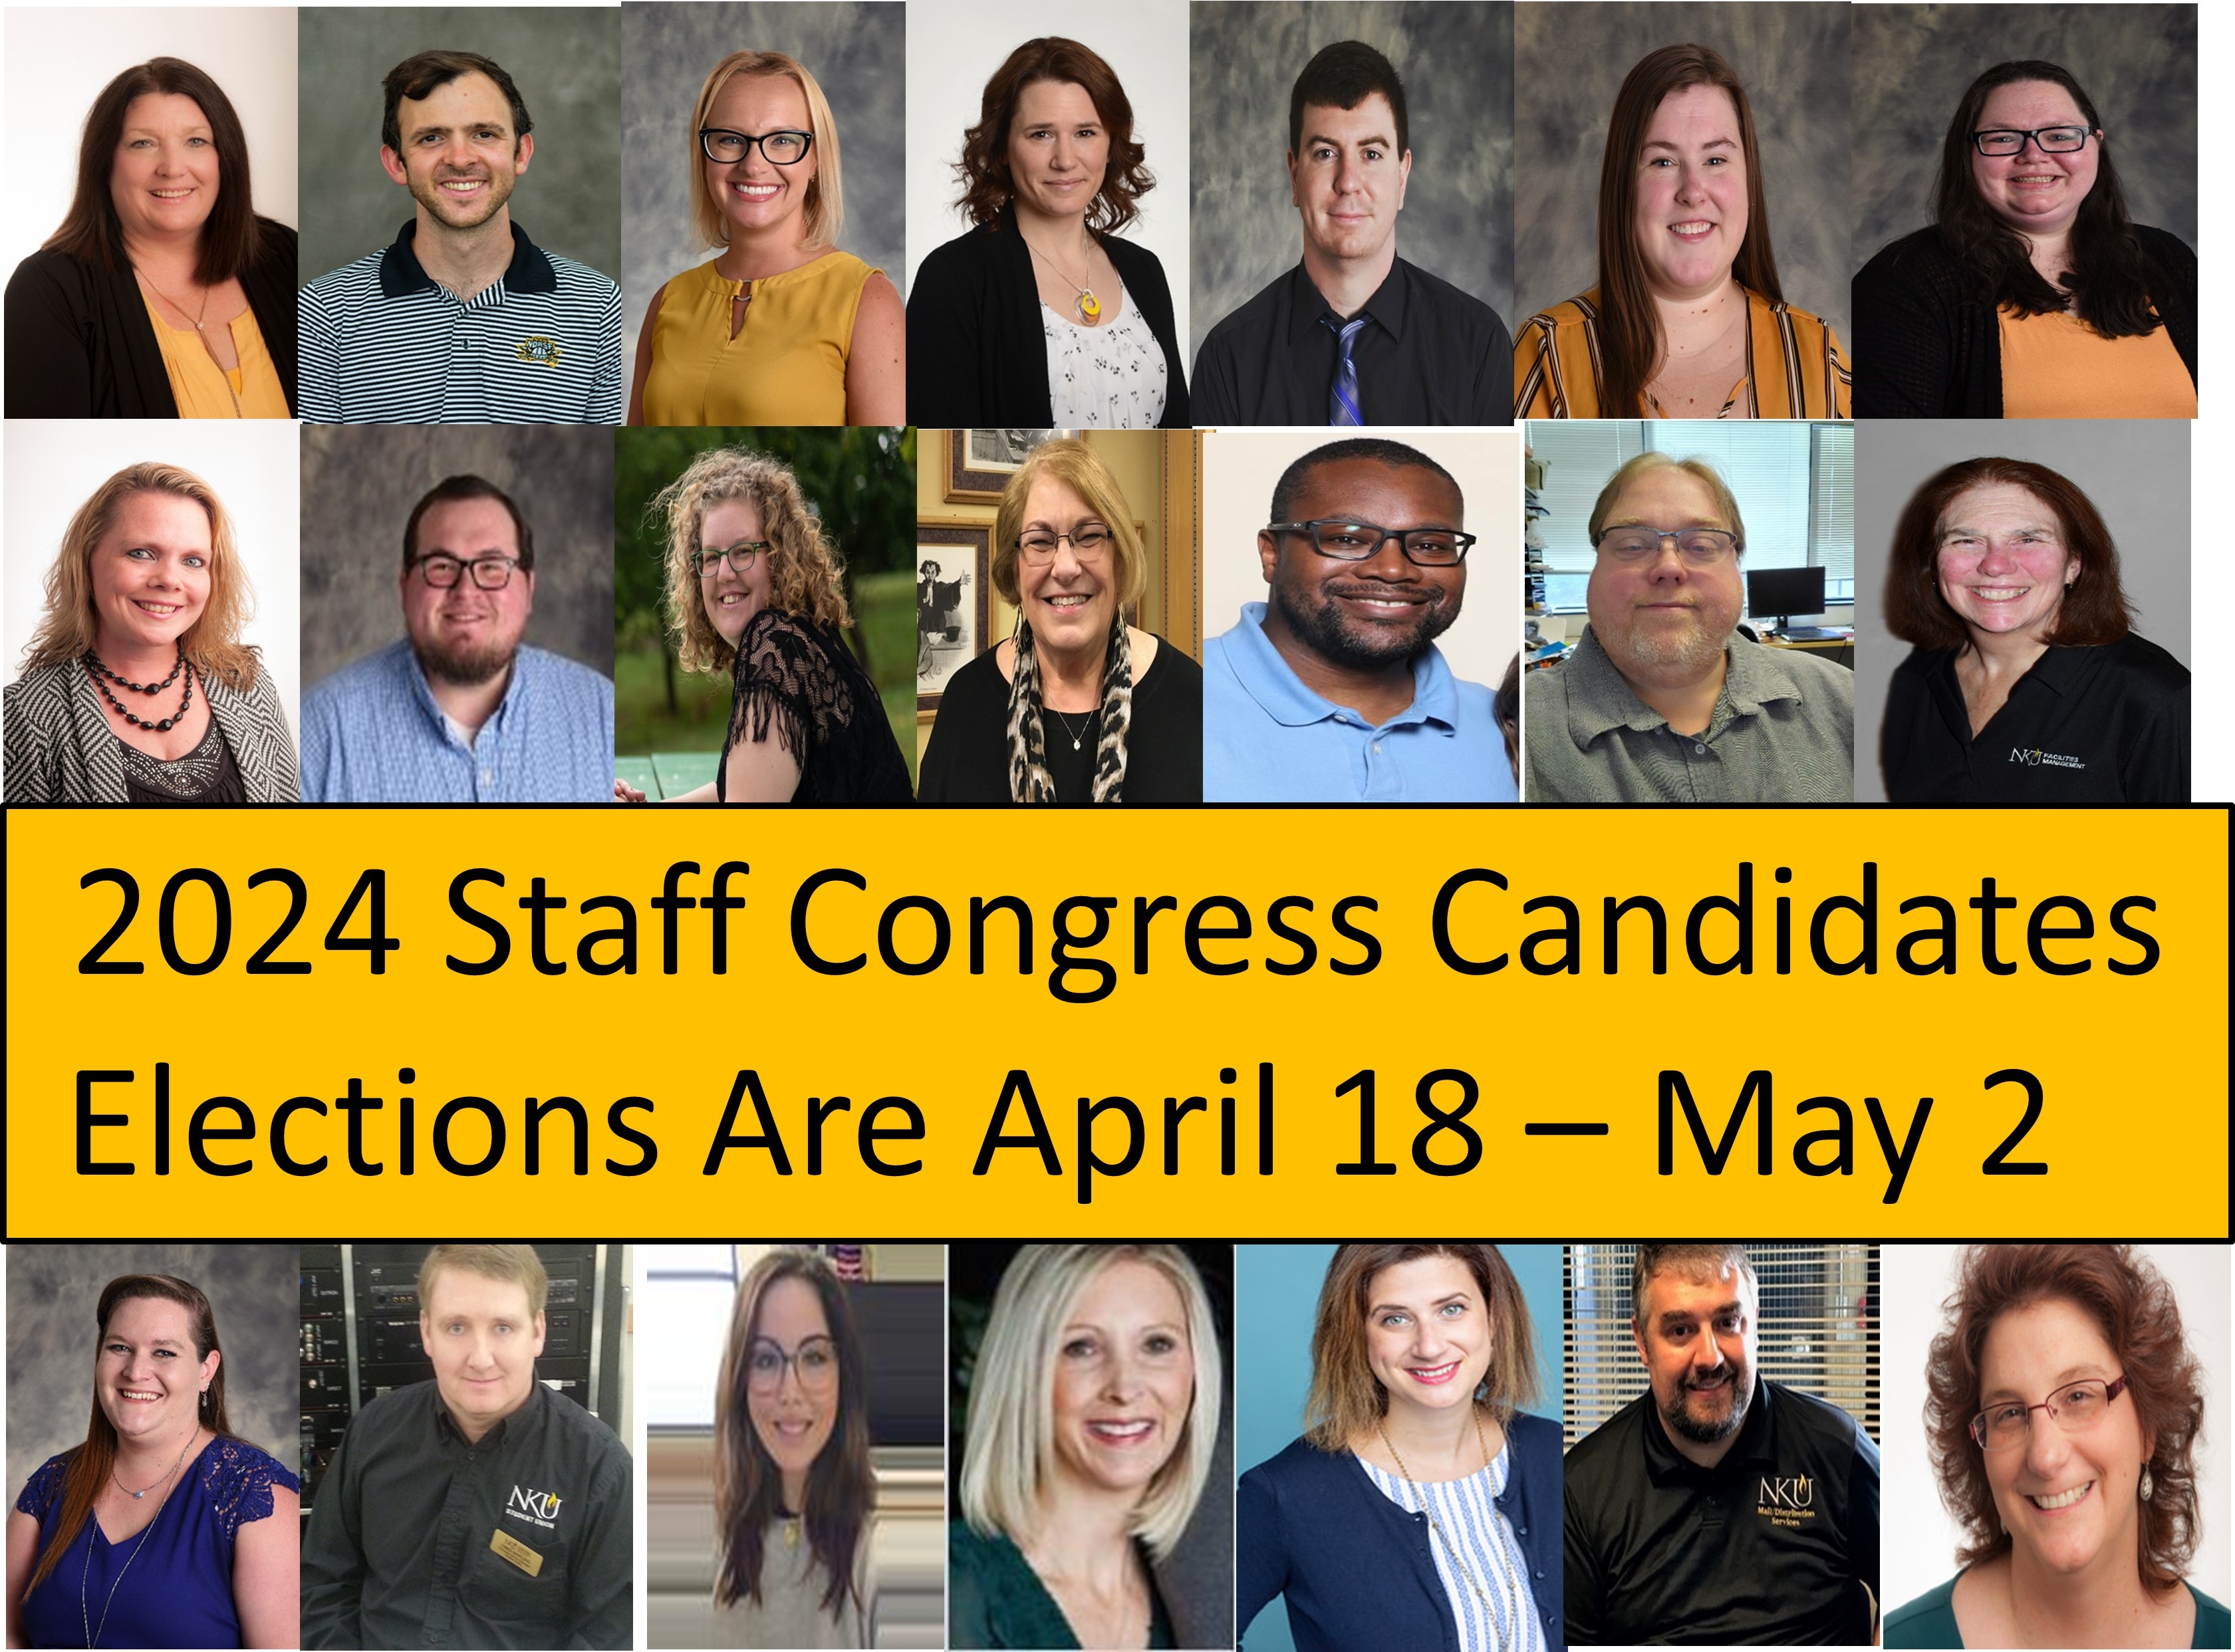 2022 Staff Congress Candidates